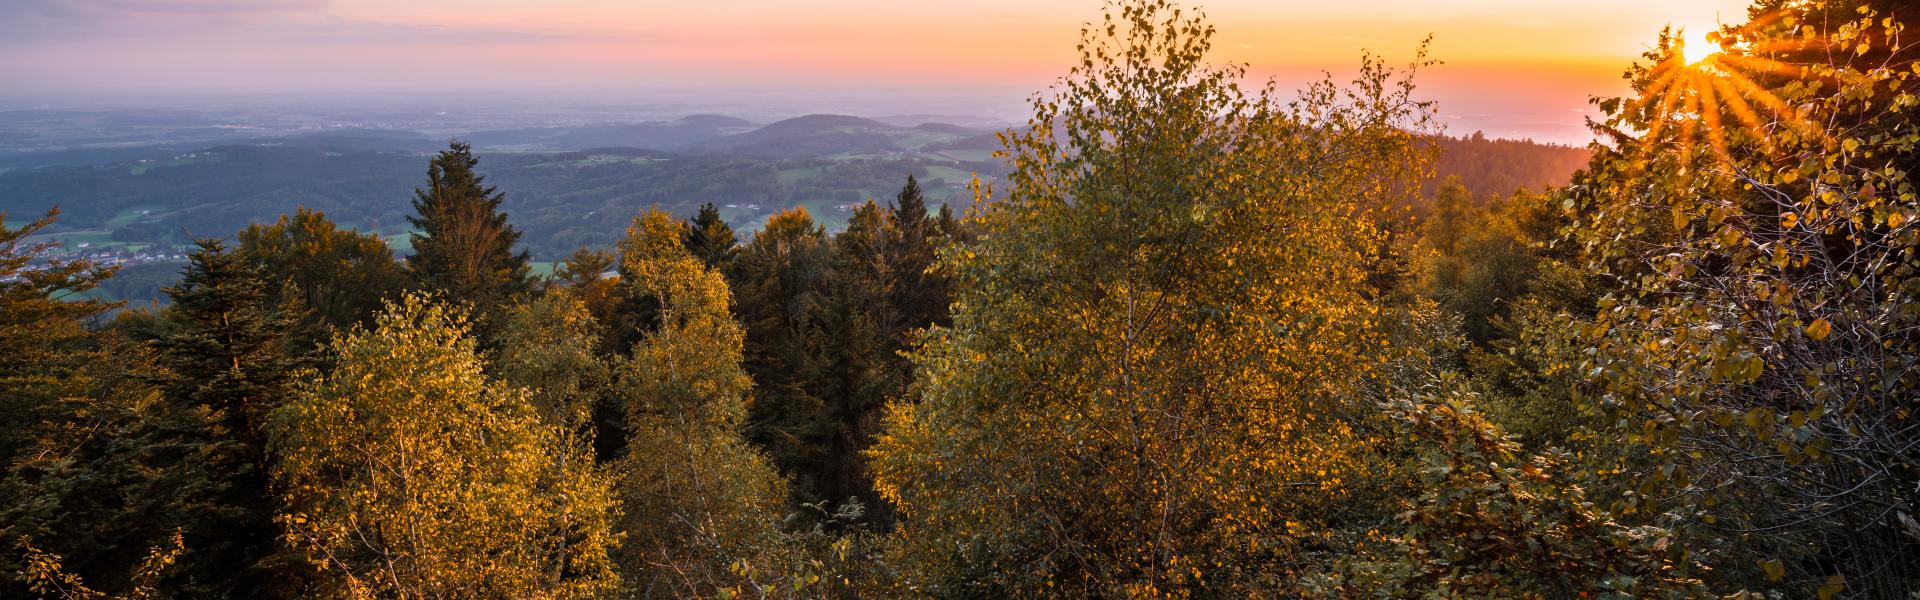 Bayerischer wald Natural View